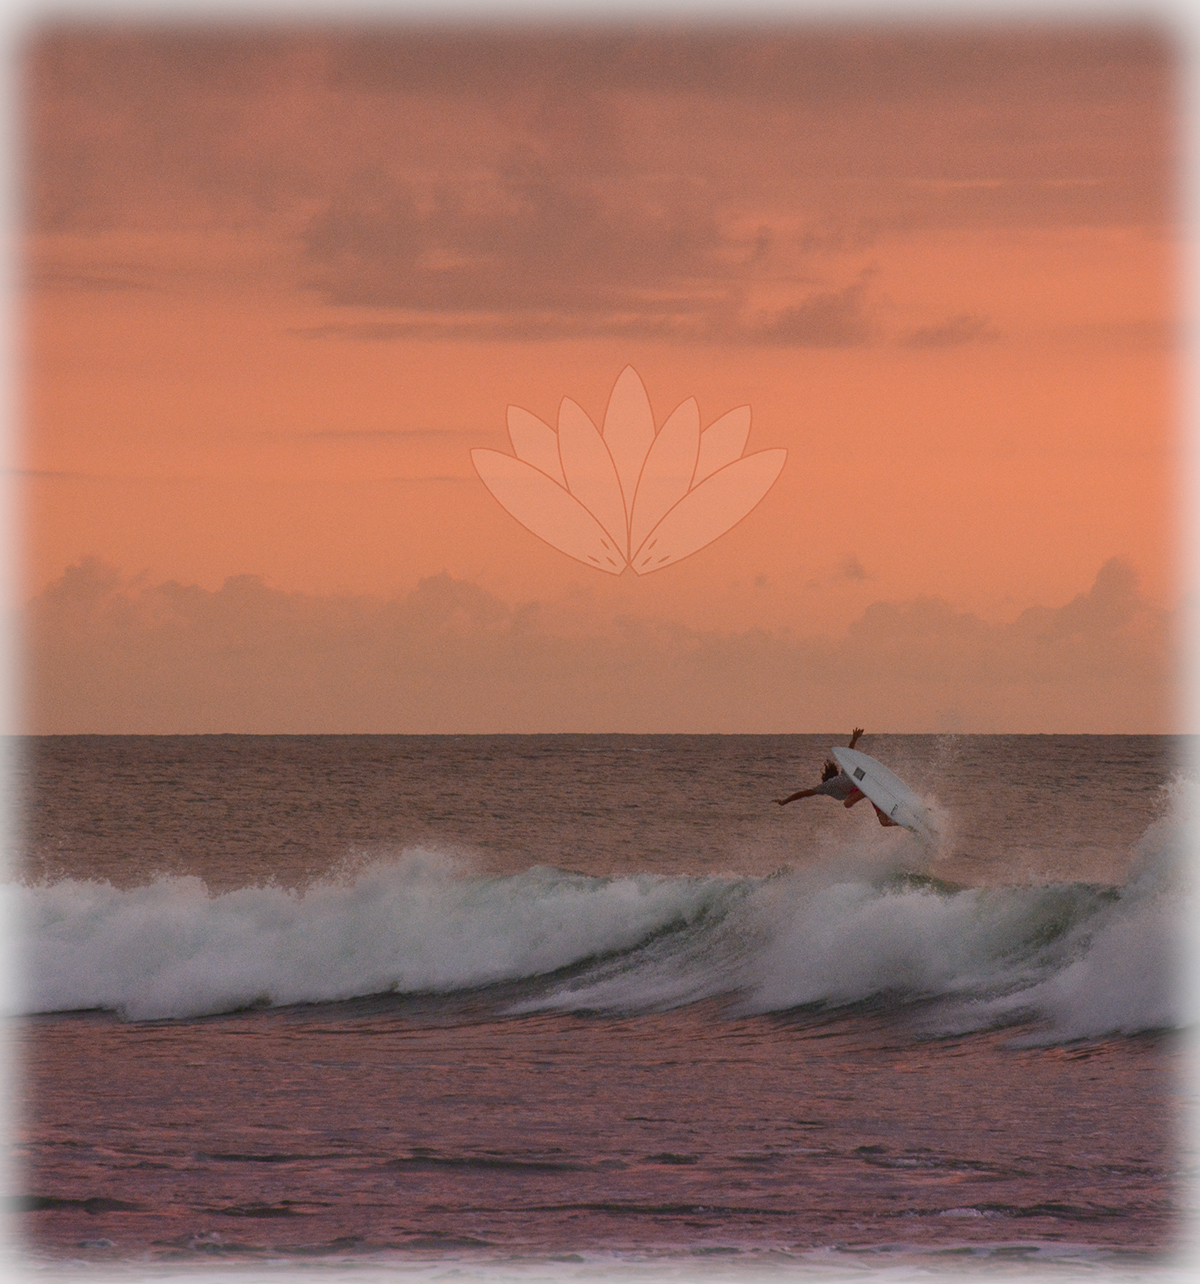 Surf dreams puresurfco Ocean sea beach waves surfer